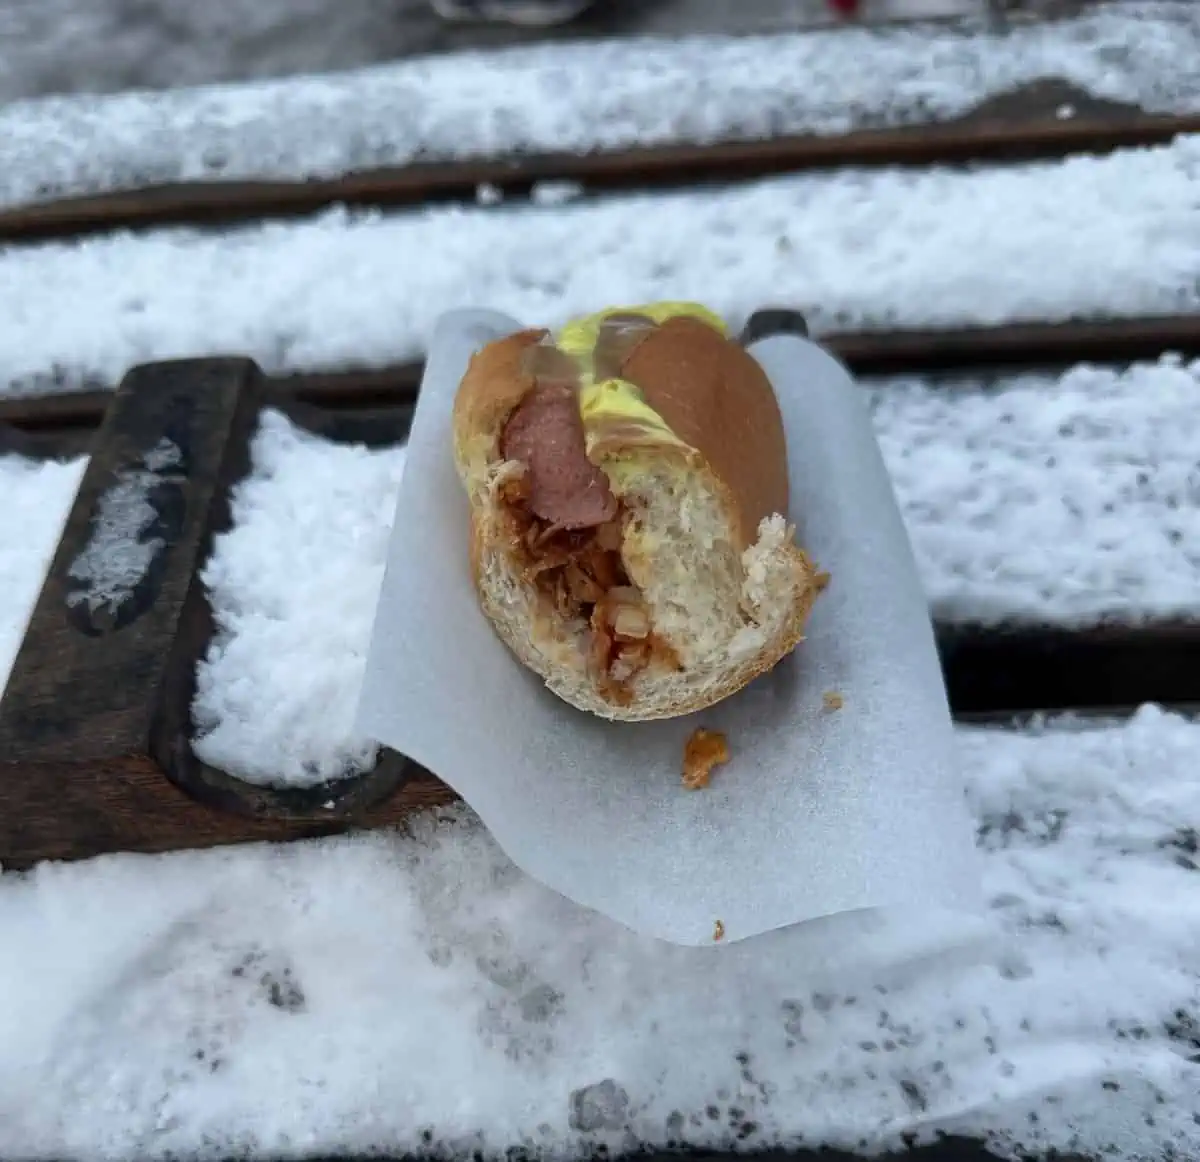 My half of the Icelandic hot dog.